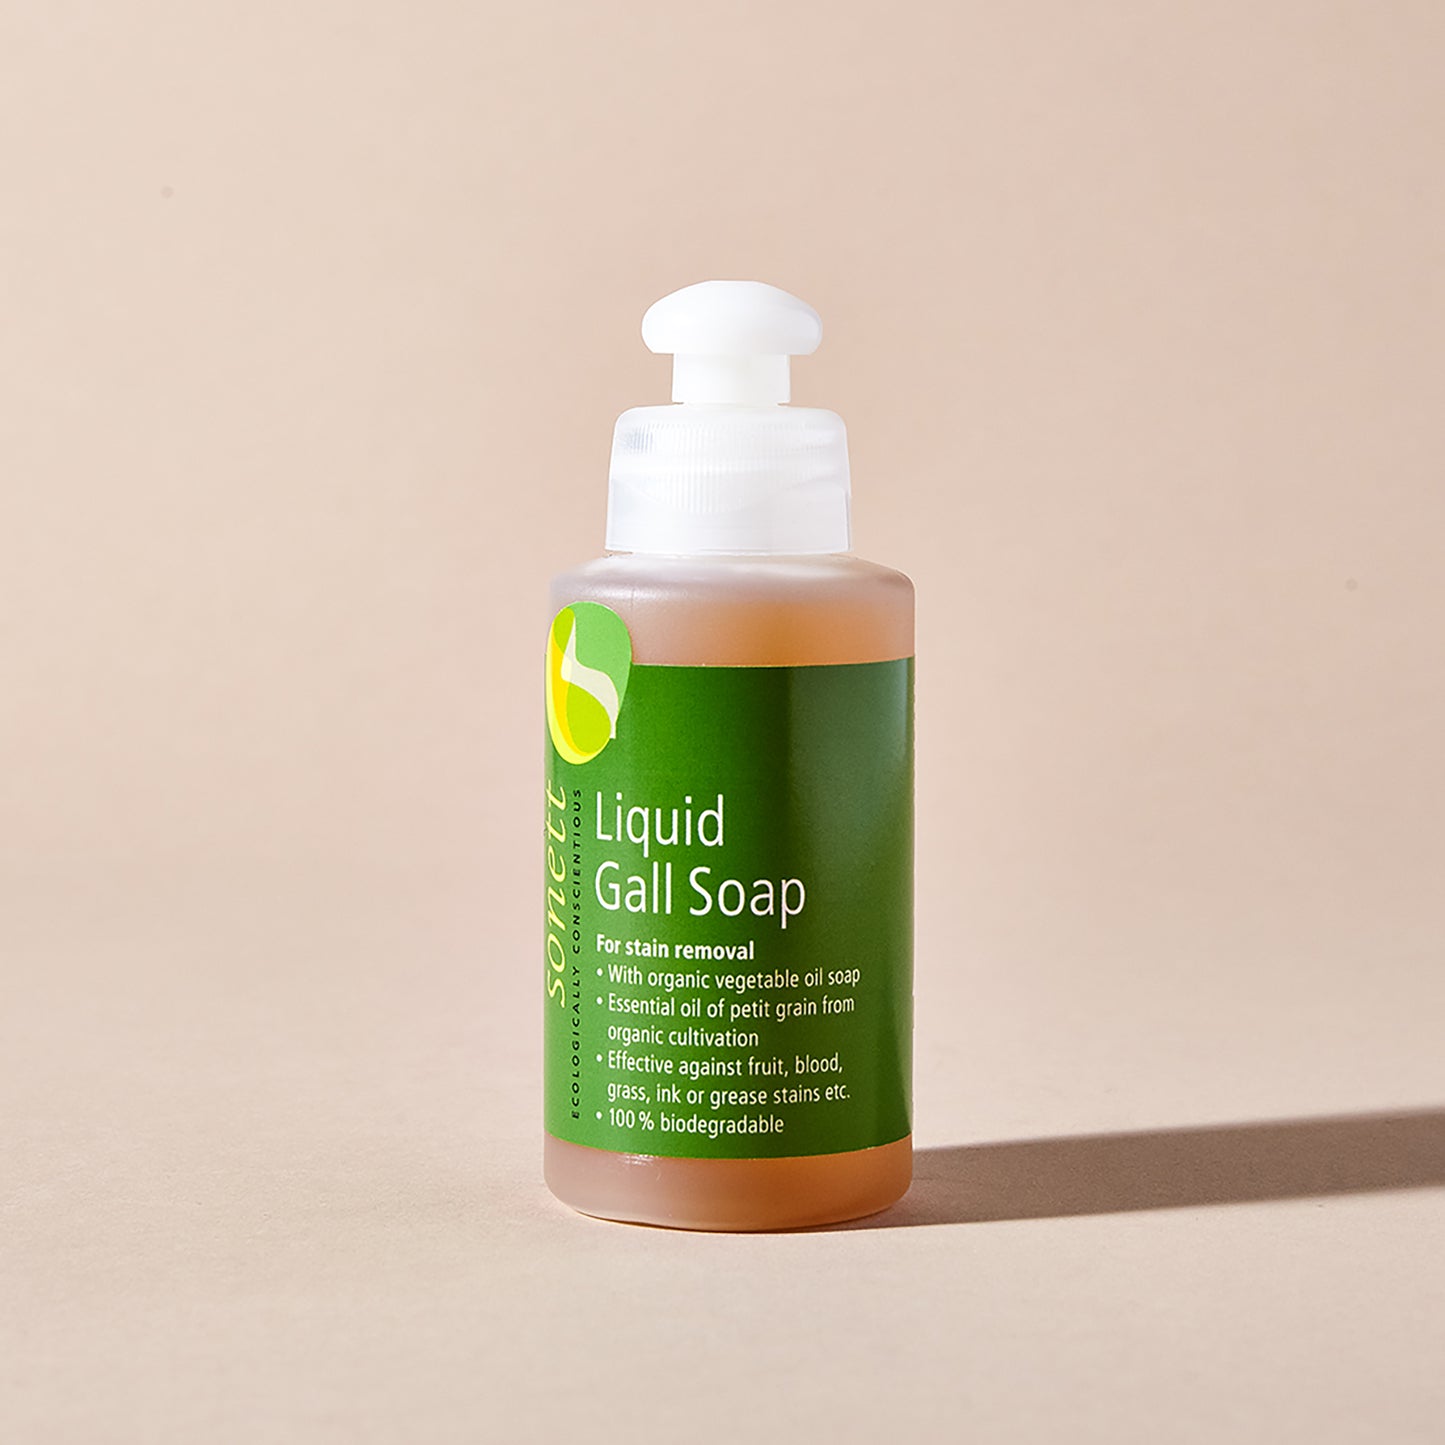 A small bottle of Sonett's liquid gall soap